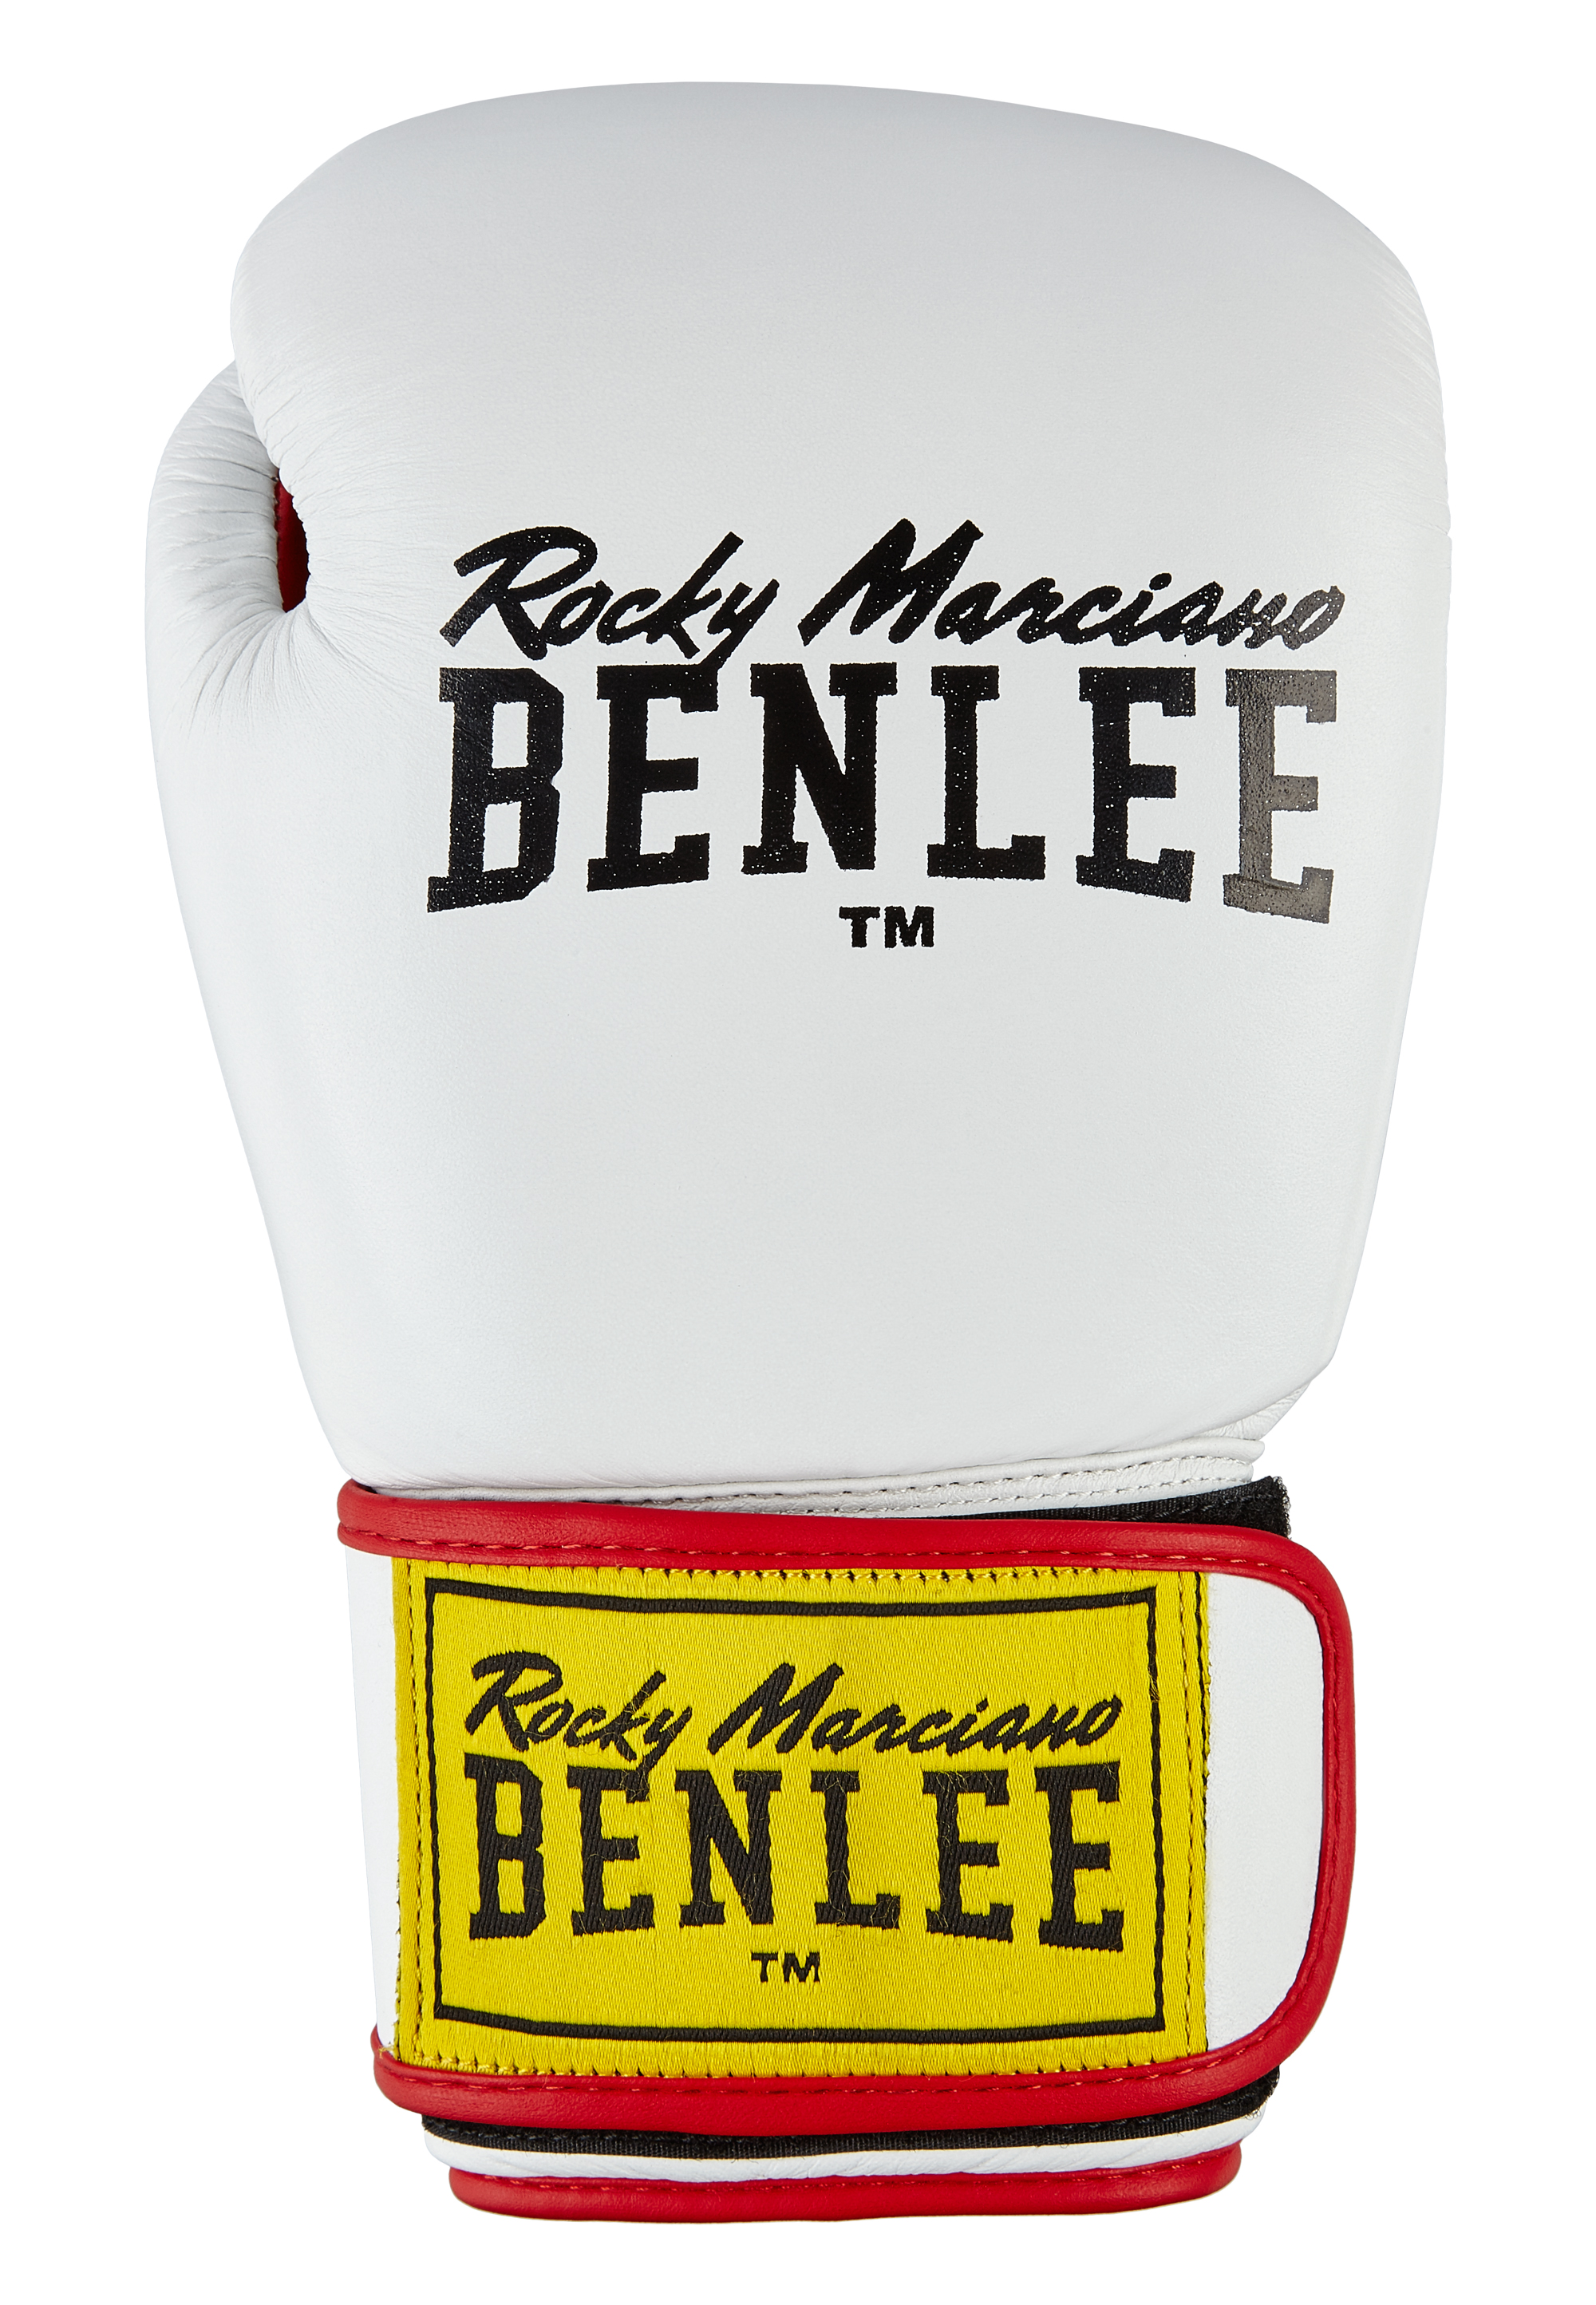  Боксерские перчатки Benlee Draco белые 